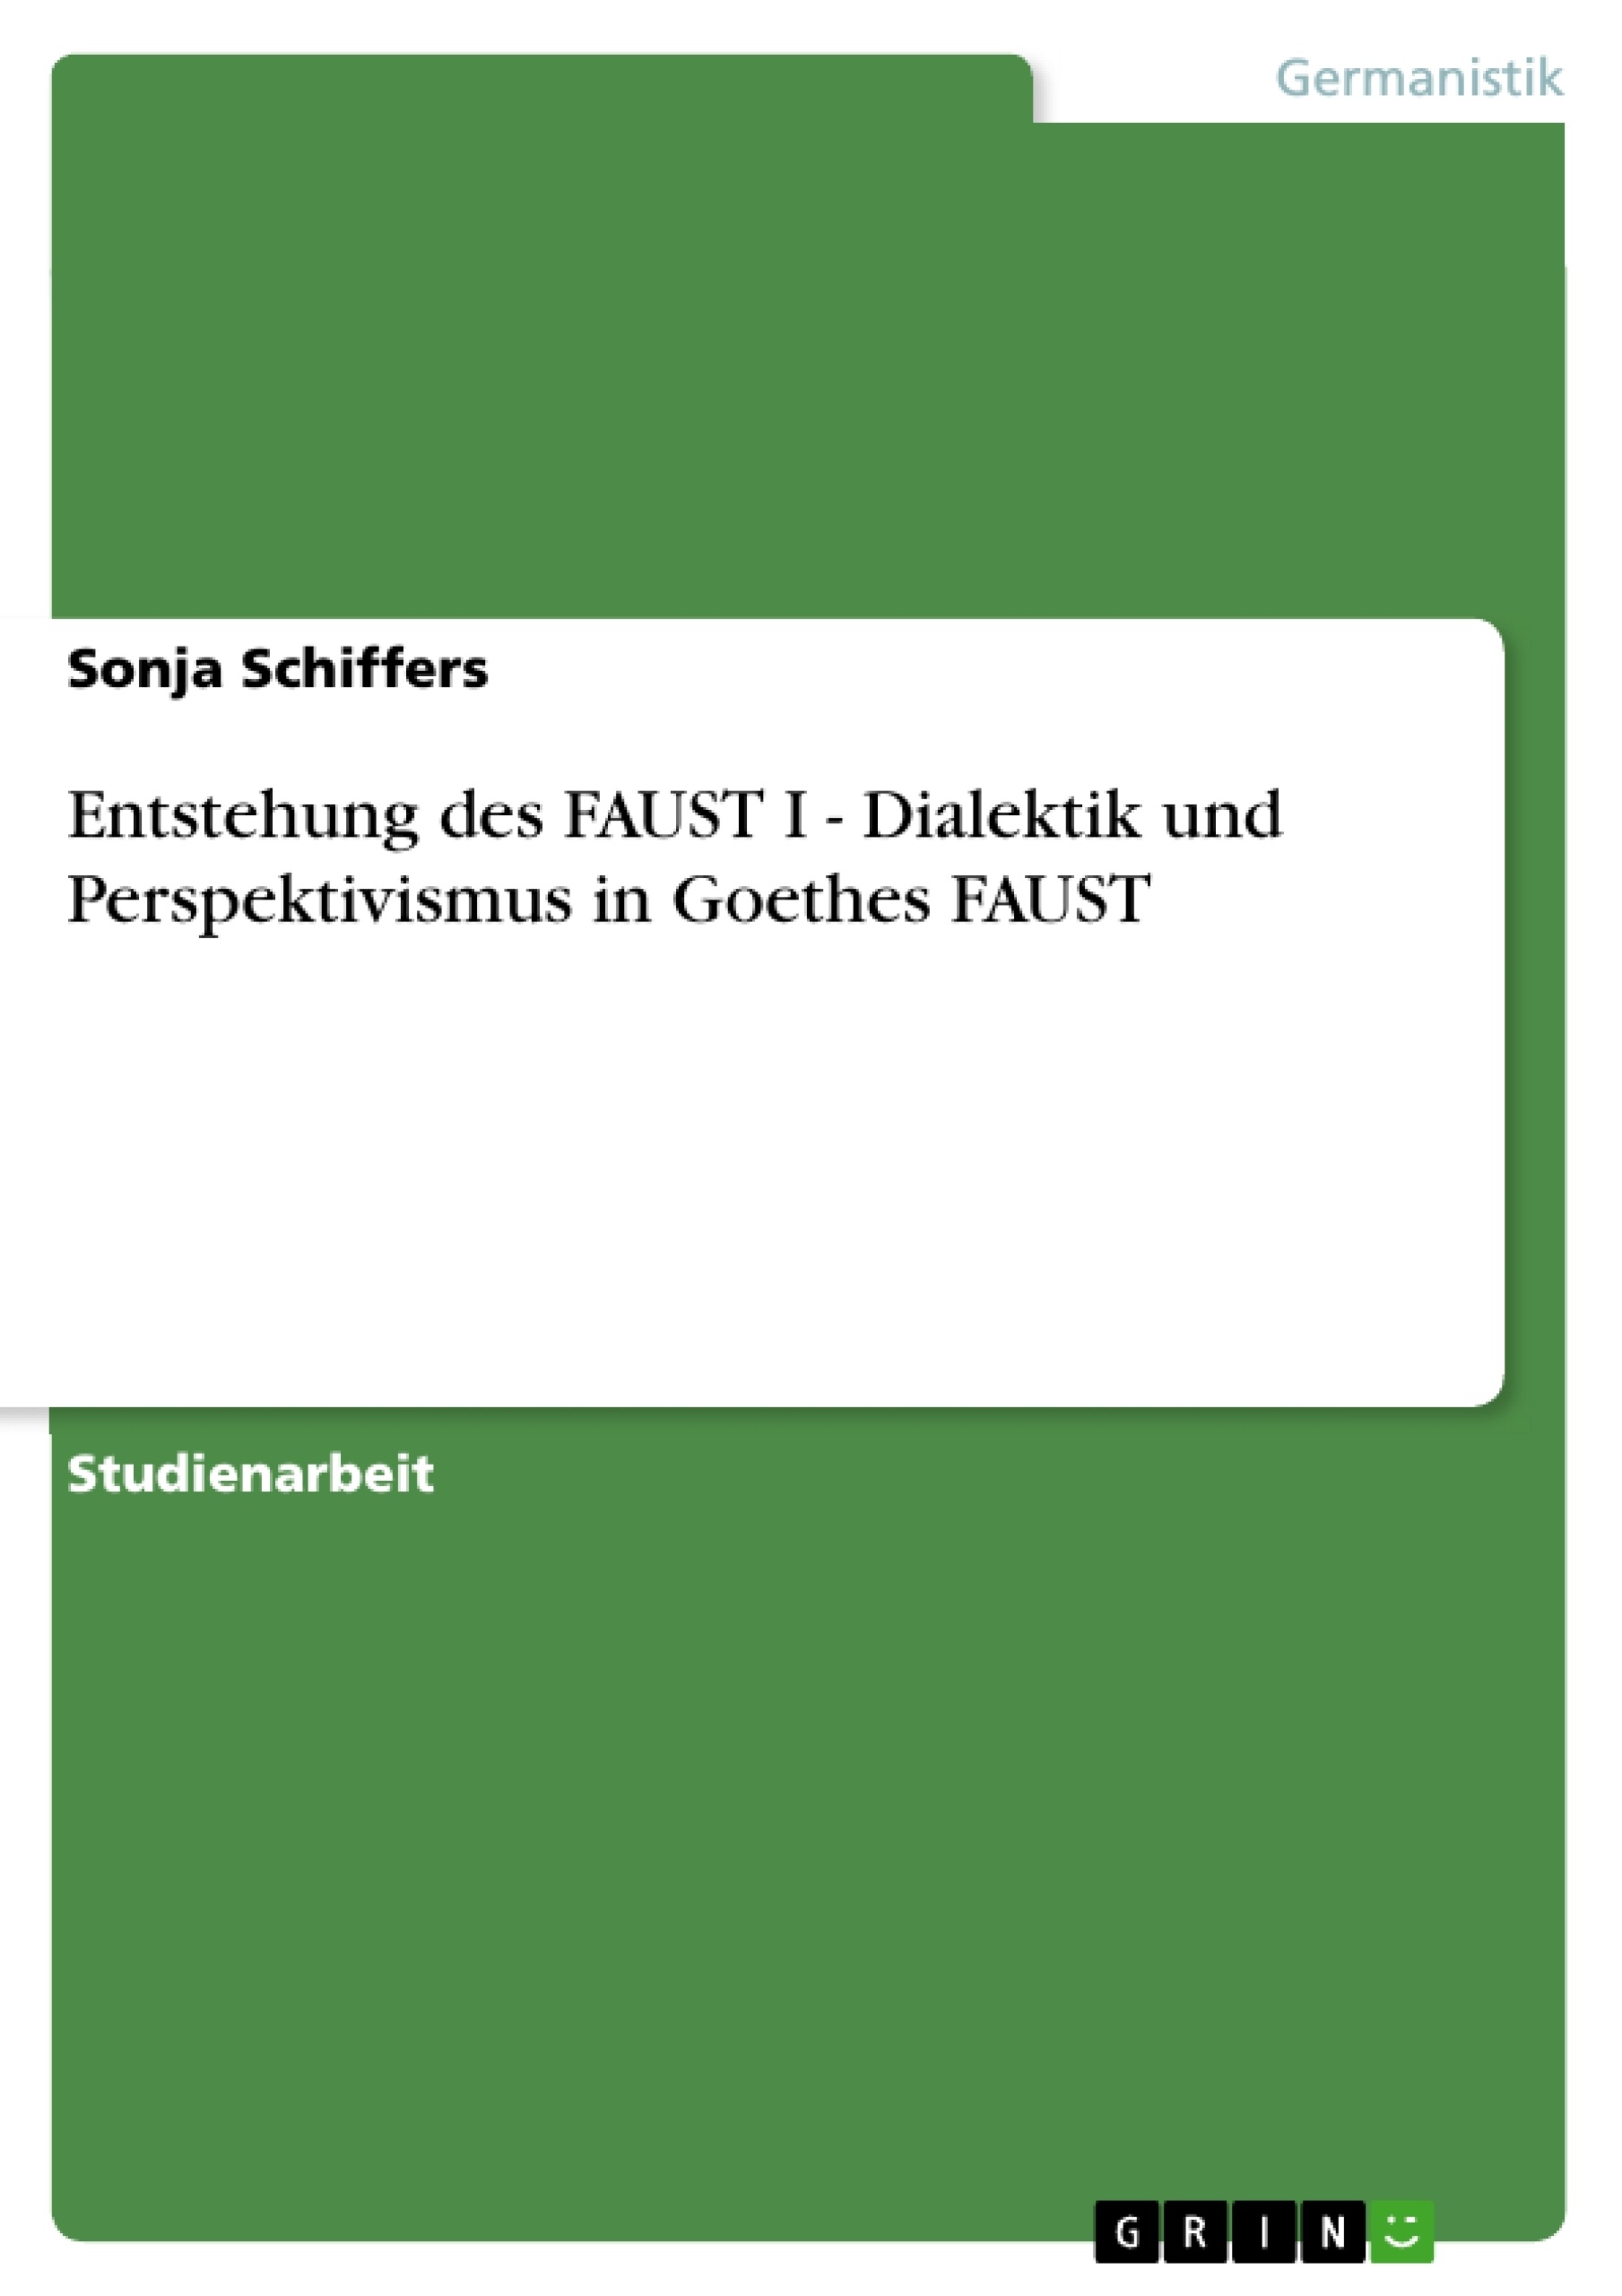 Title: Entstehung des FAUST I - Dialektik und Perspektivismus in Goethes FAUST